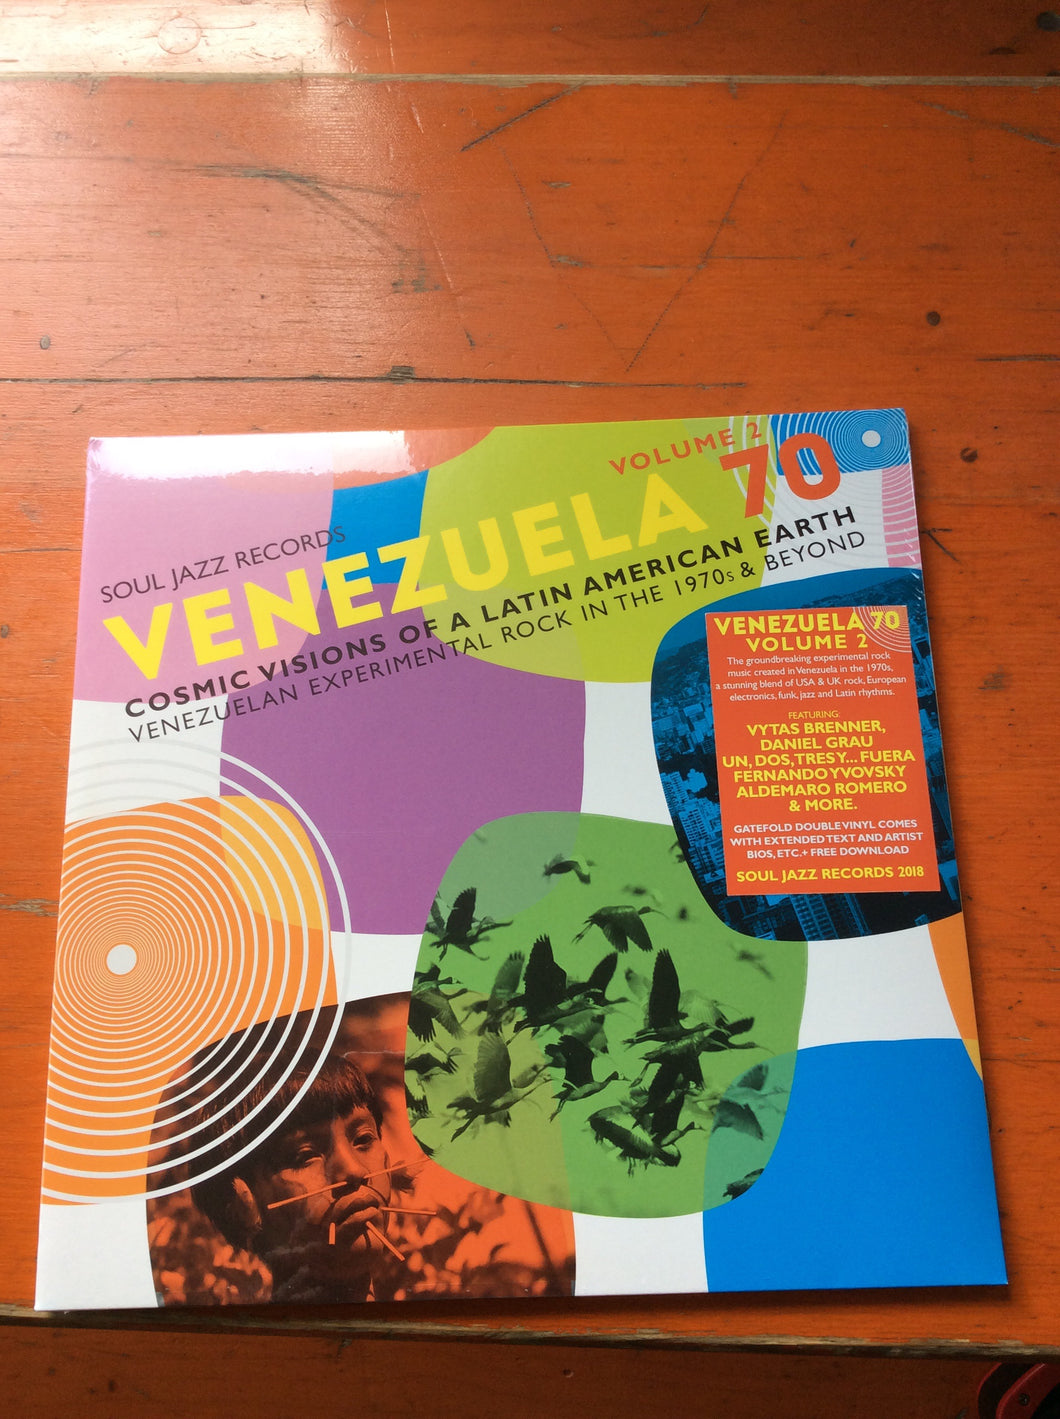 Various Artists / Soul Jazz Records Presents - VENEZUELA 70 Vol.2 - Cosmic Visions Of A Latin American Earth: Venezuelan Rock In The 1970s & Beyond